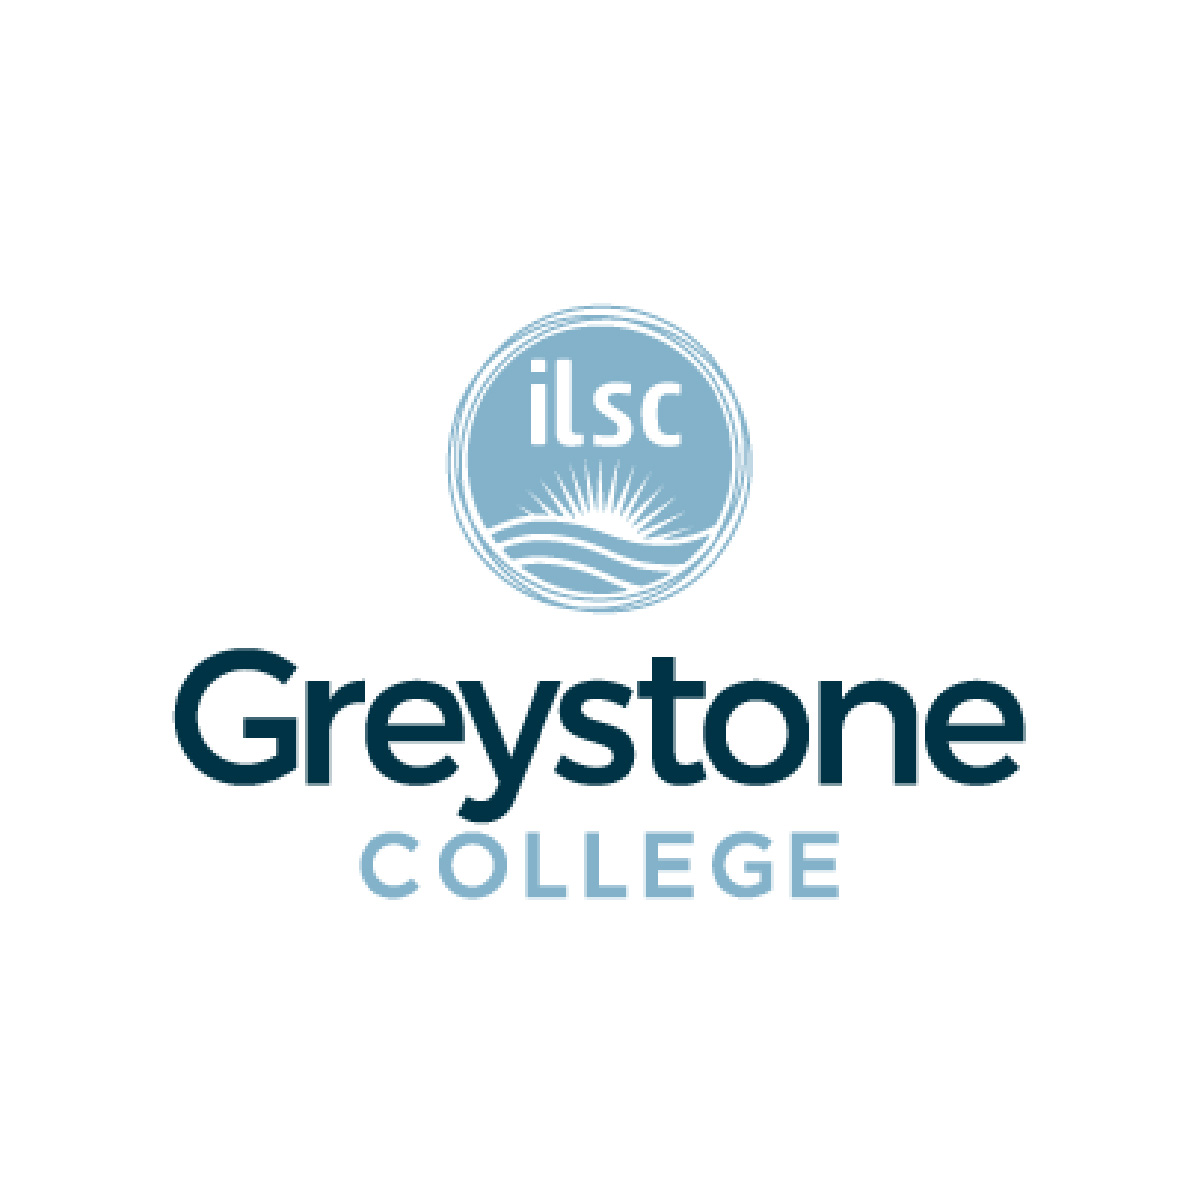 Greystone College, Powered by Wawiwa